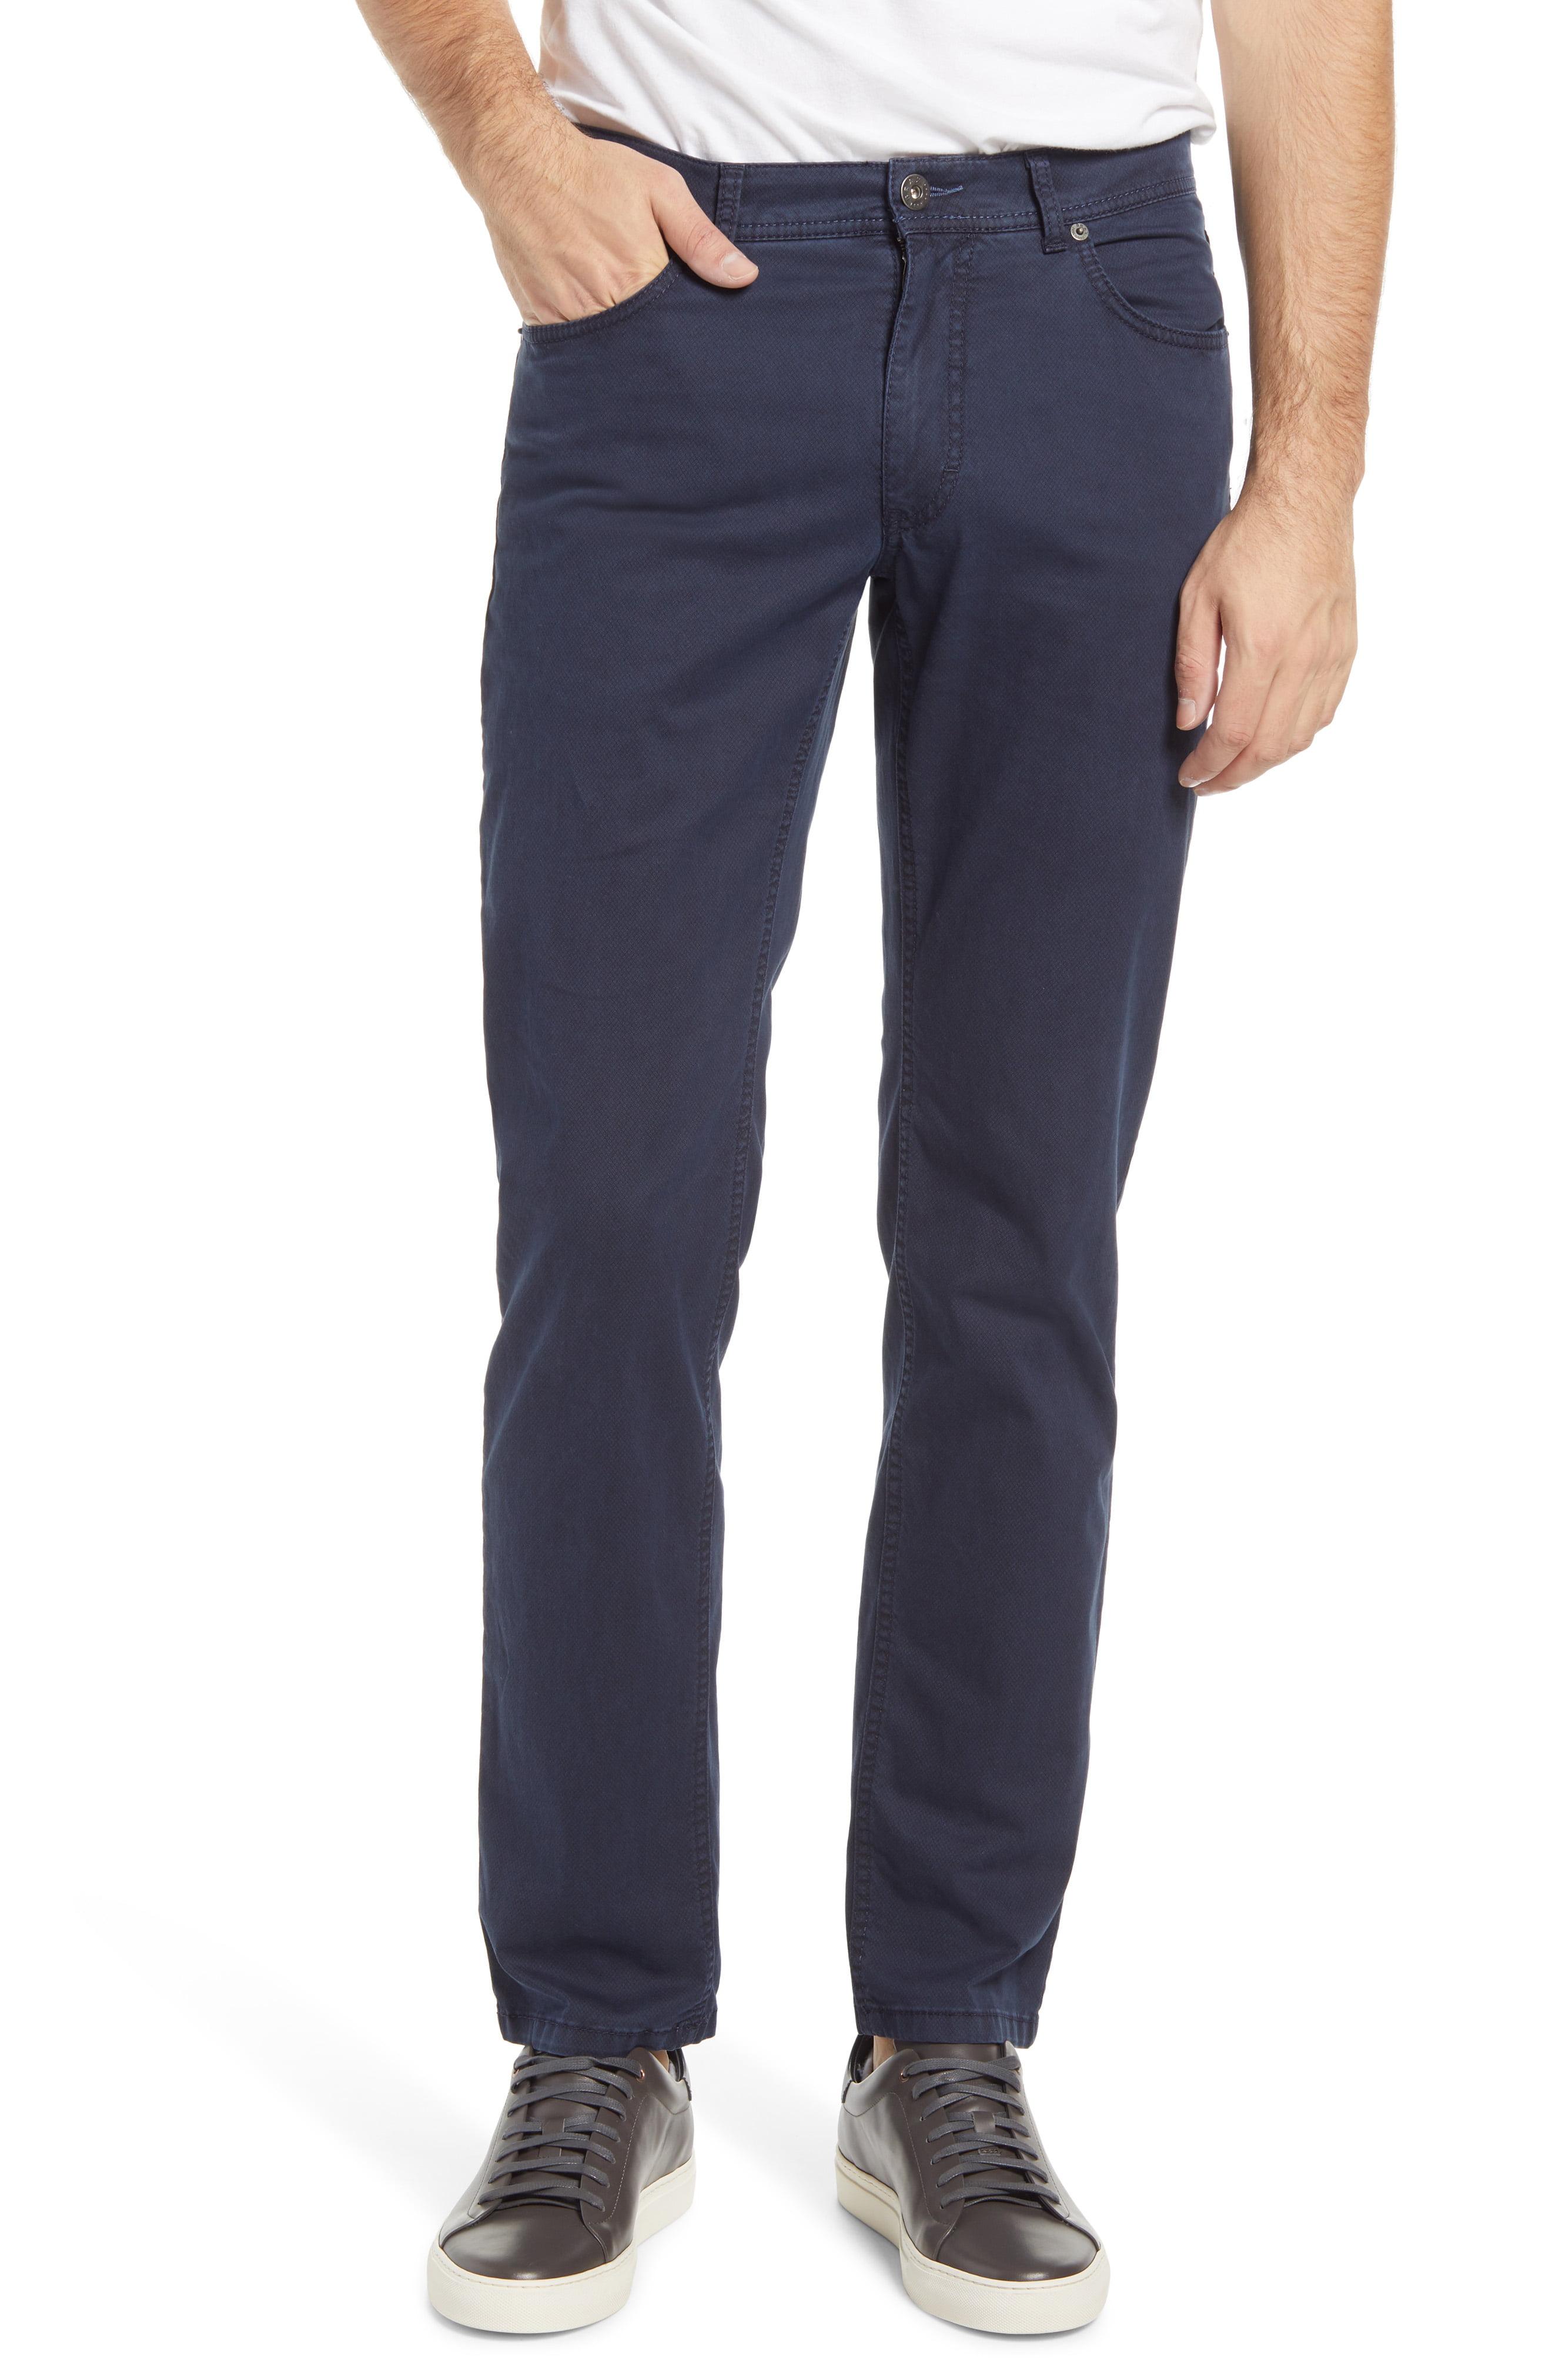 Brax Denim Cooper Fancy Five-pocket Pants in Navy (Blue) for Men - Lyst